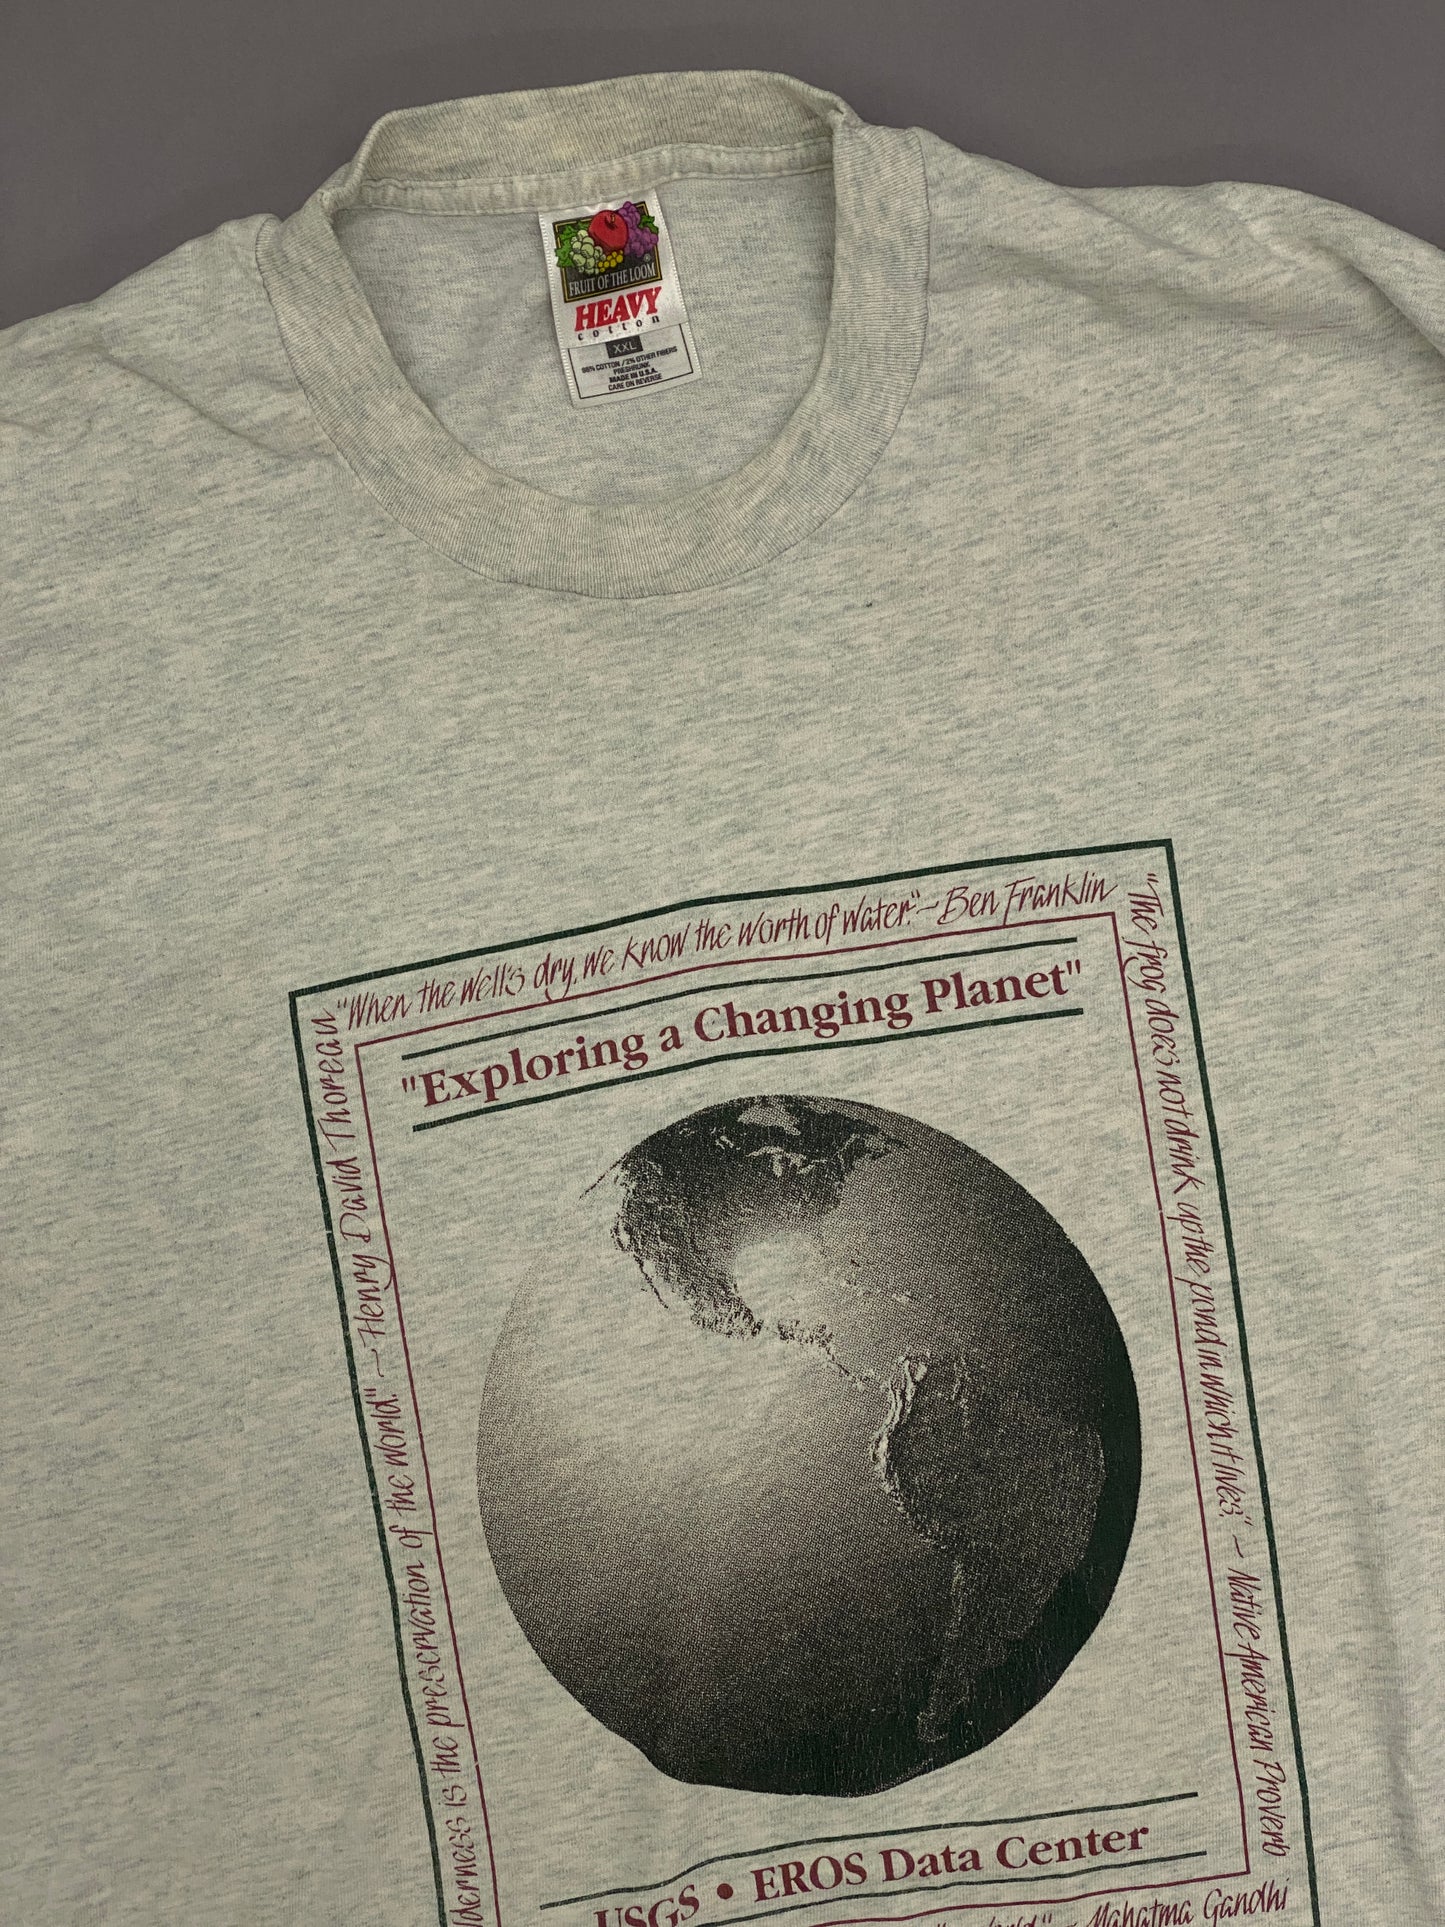 Vintage Planet T-shirt